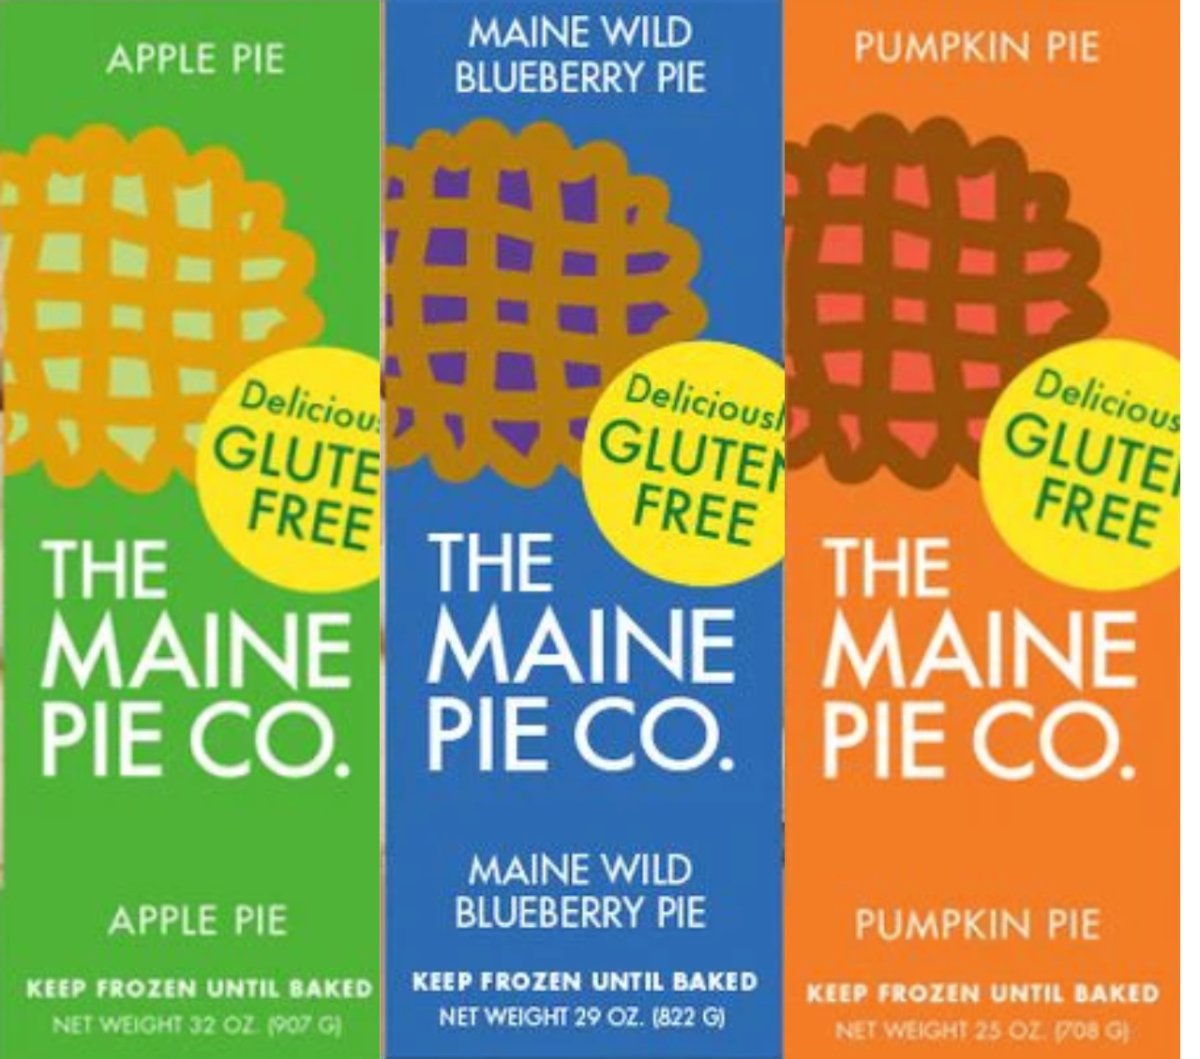 Gluten-free Pies From Maine Pie Co. - Heartstone Farm